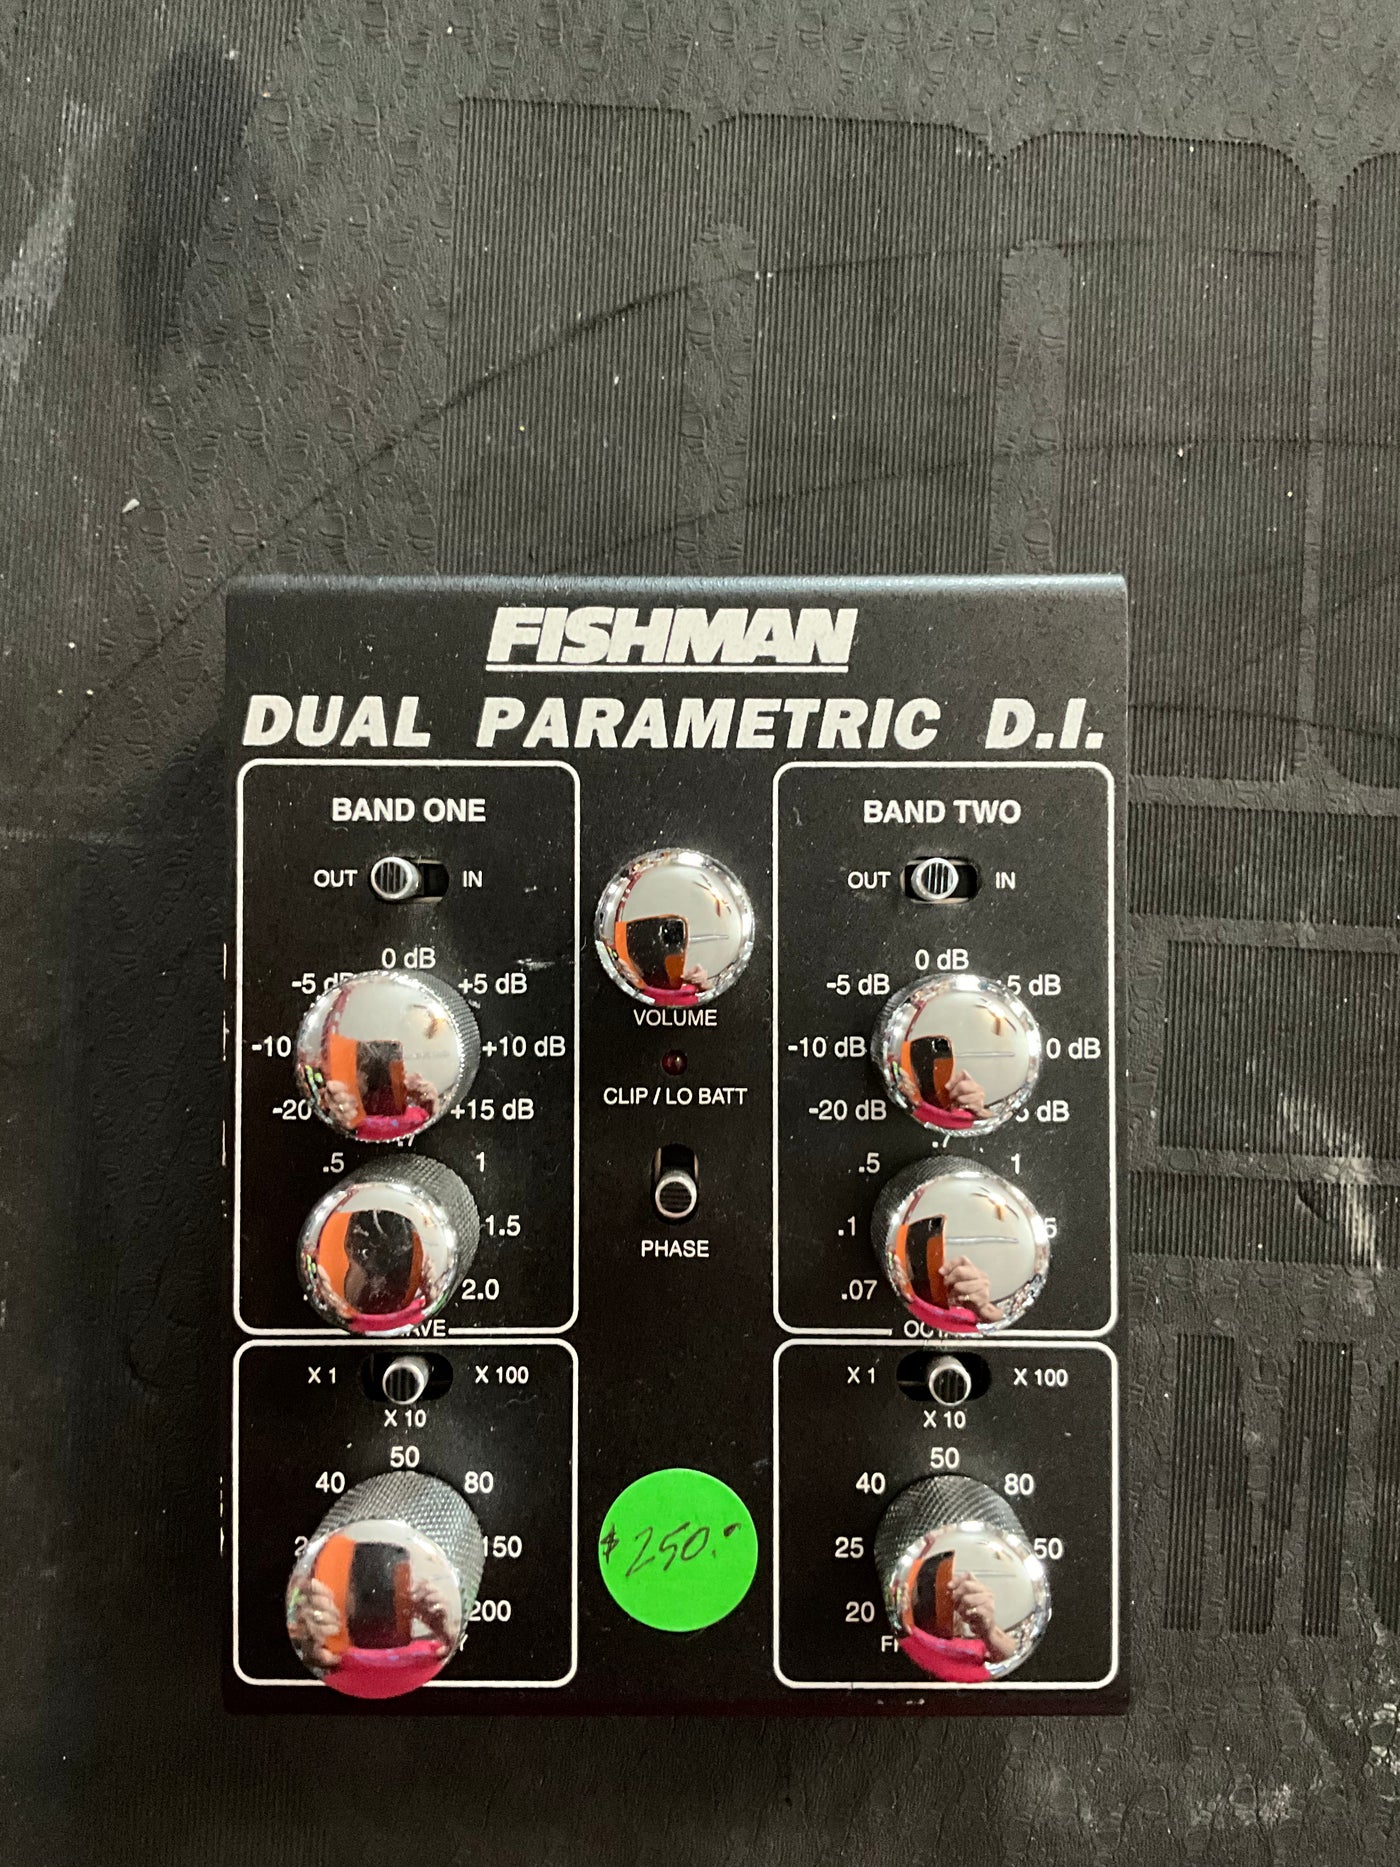 Fishman Dual Parametric DI